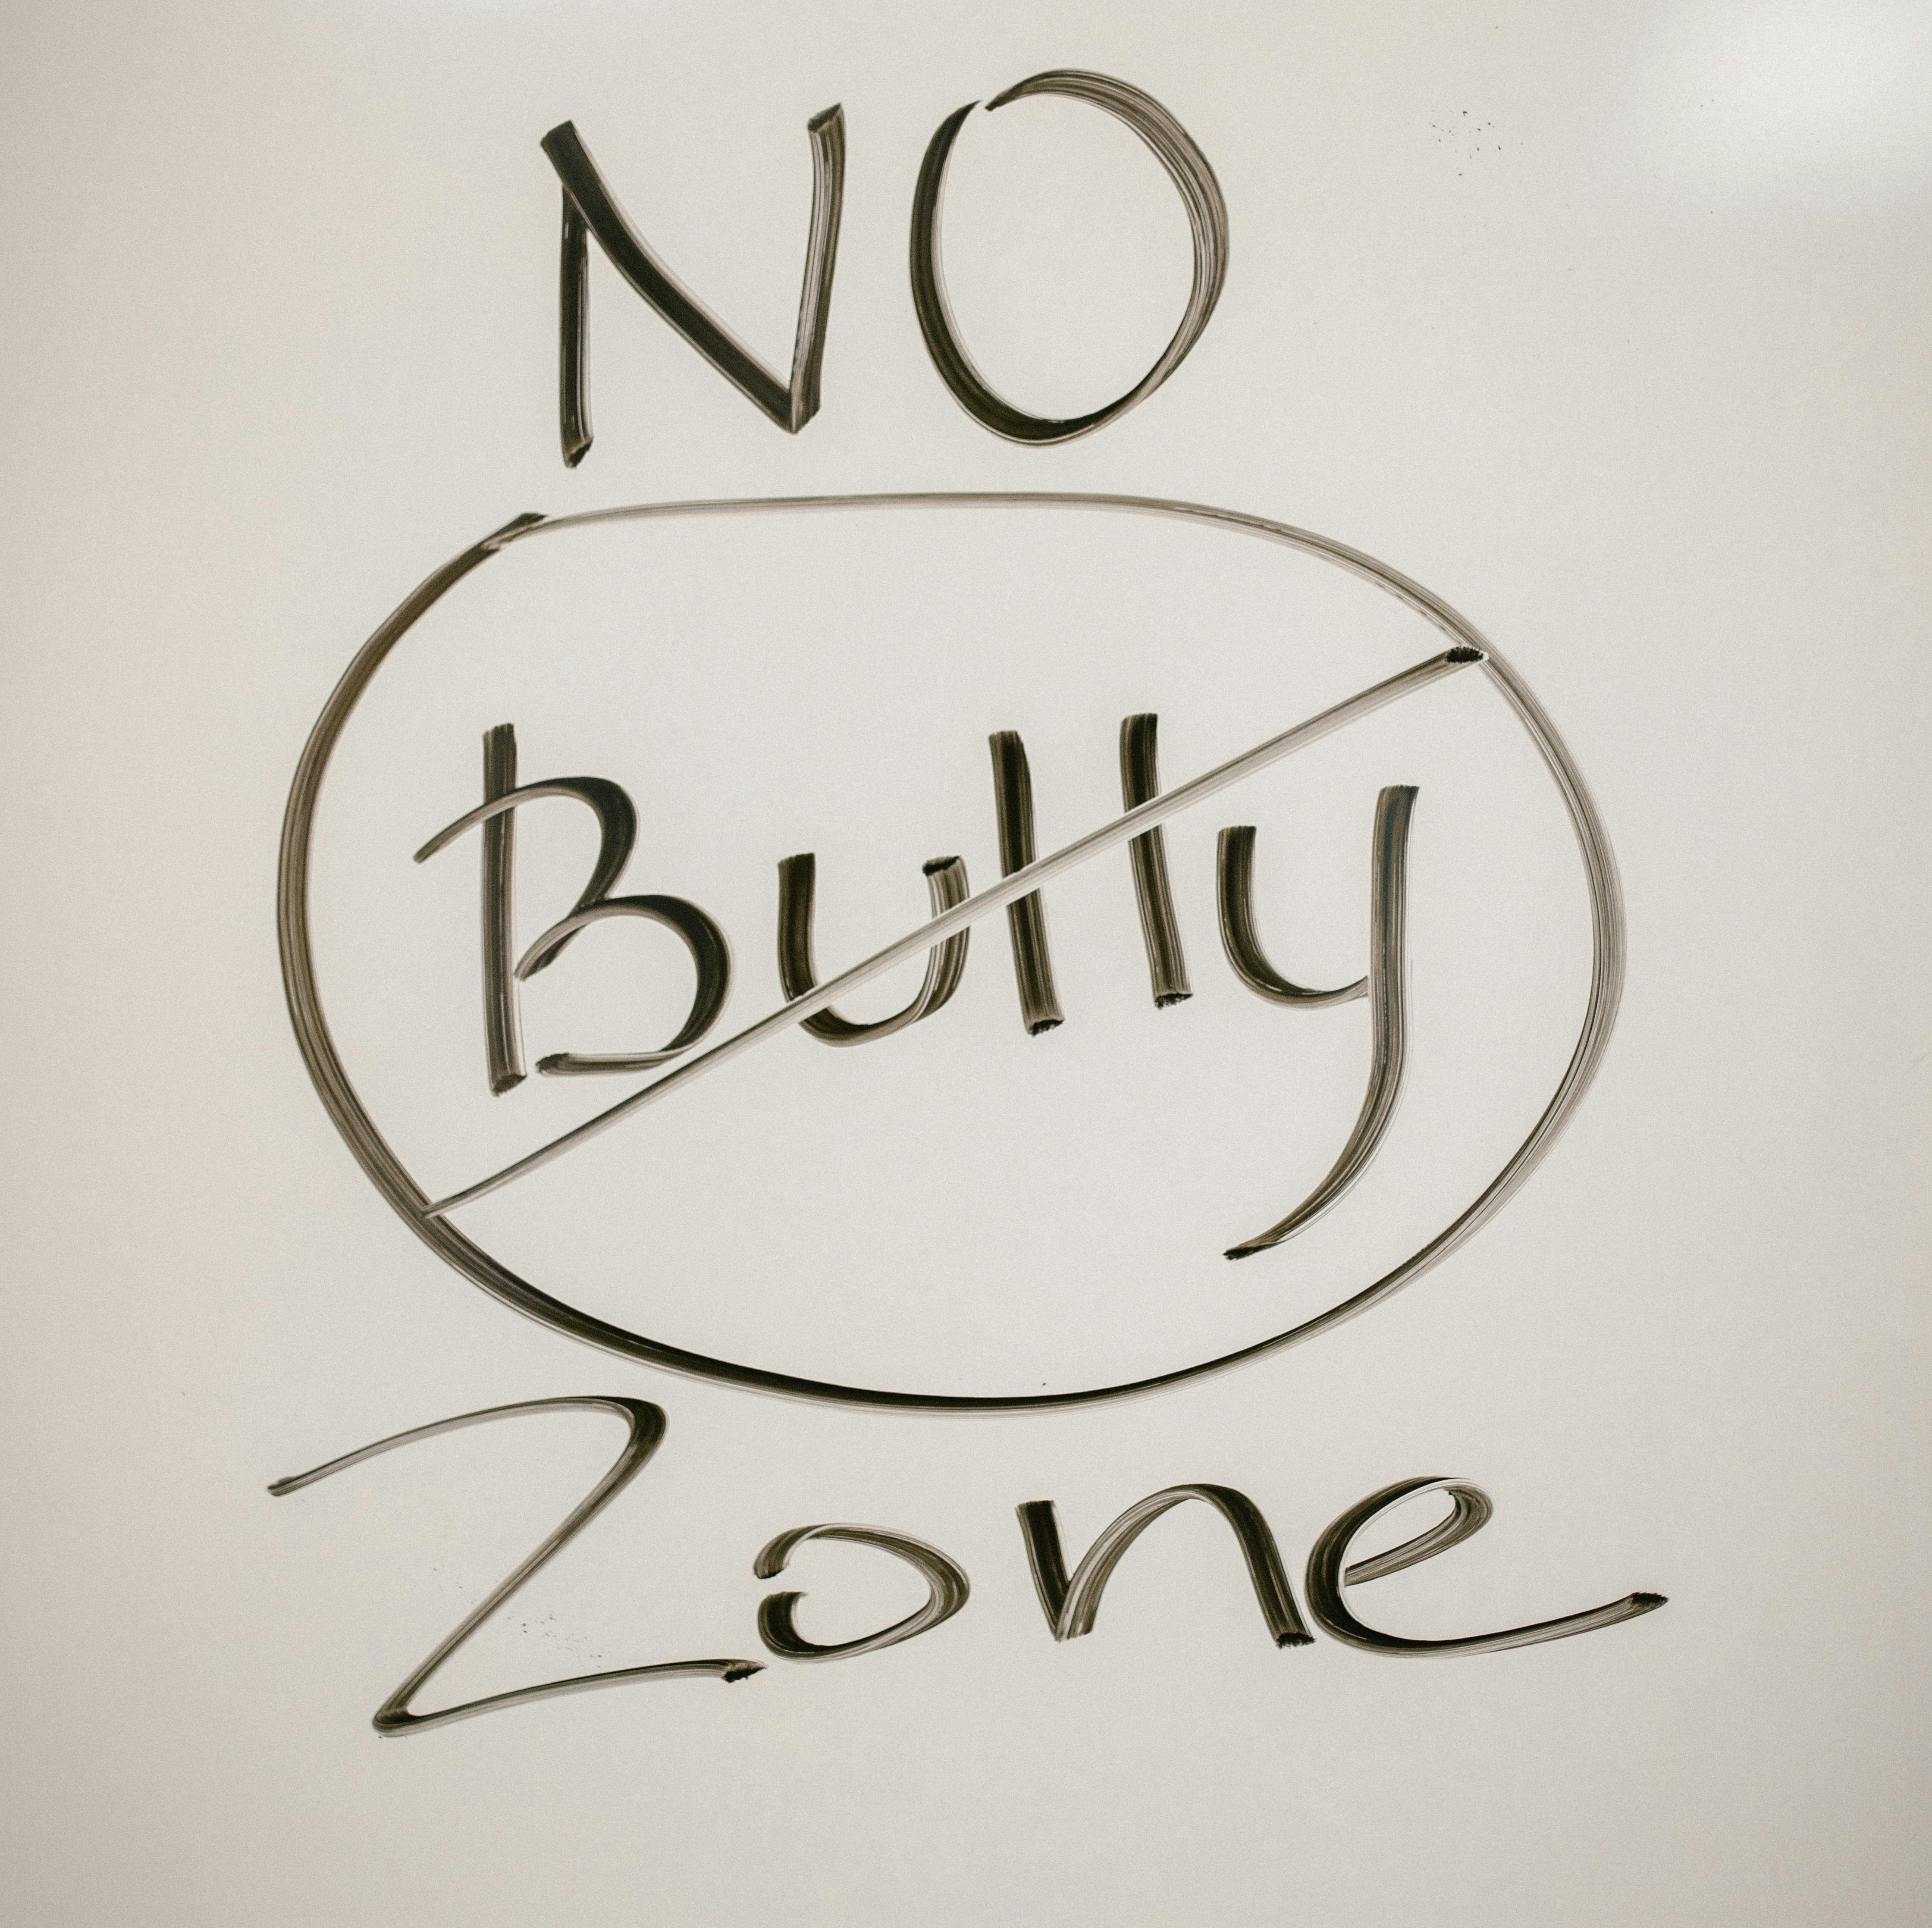 No bully zone, written in black pen on a white paper